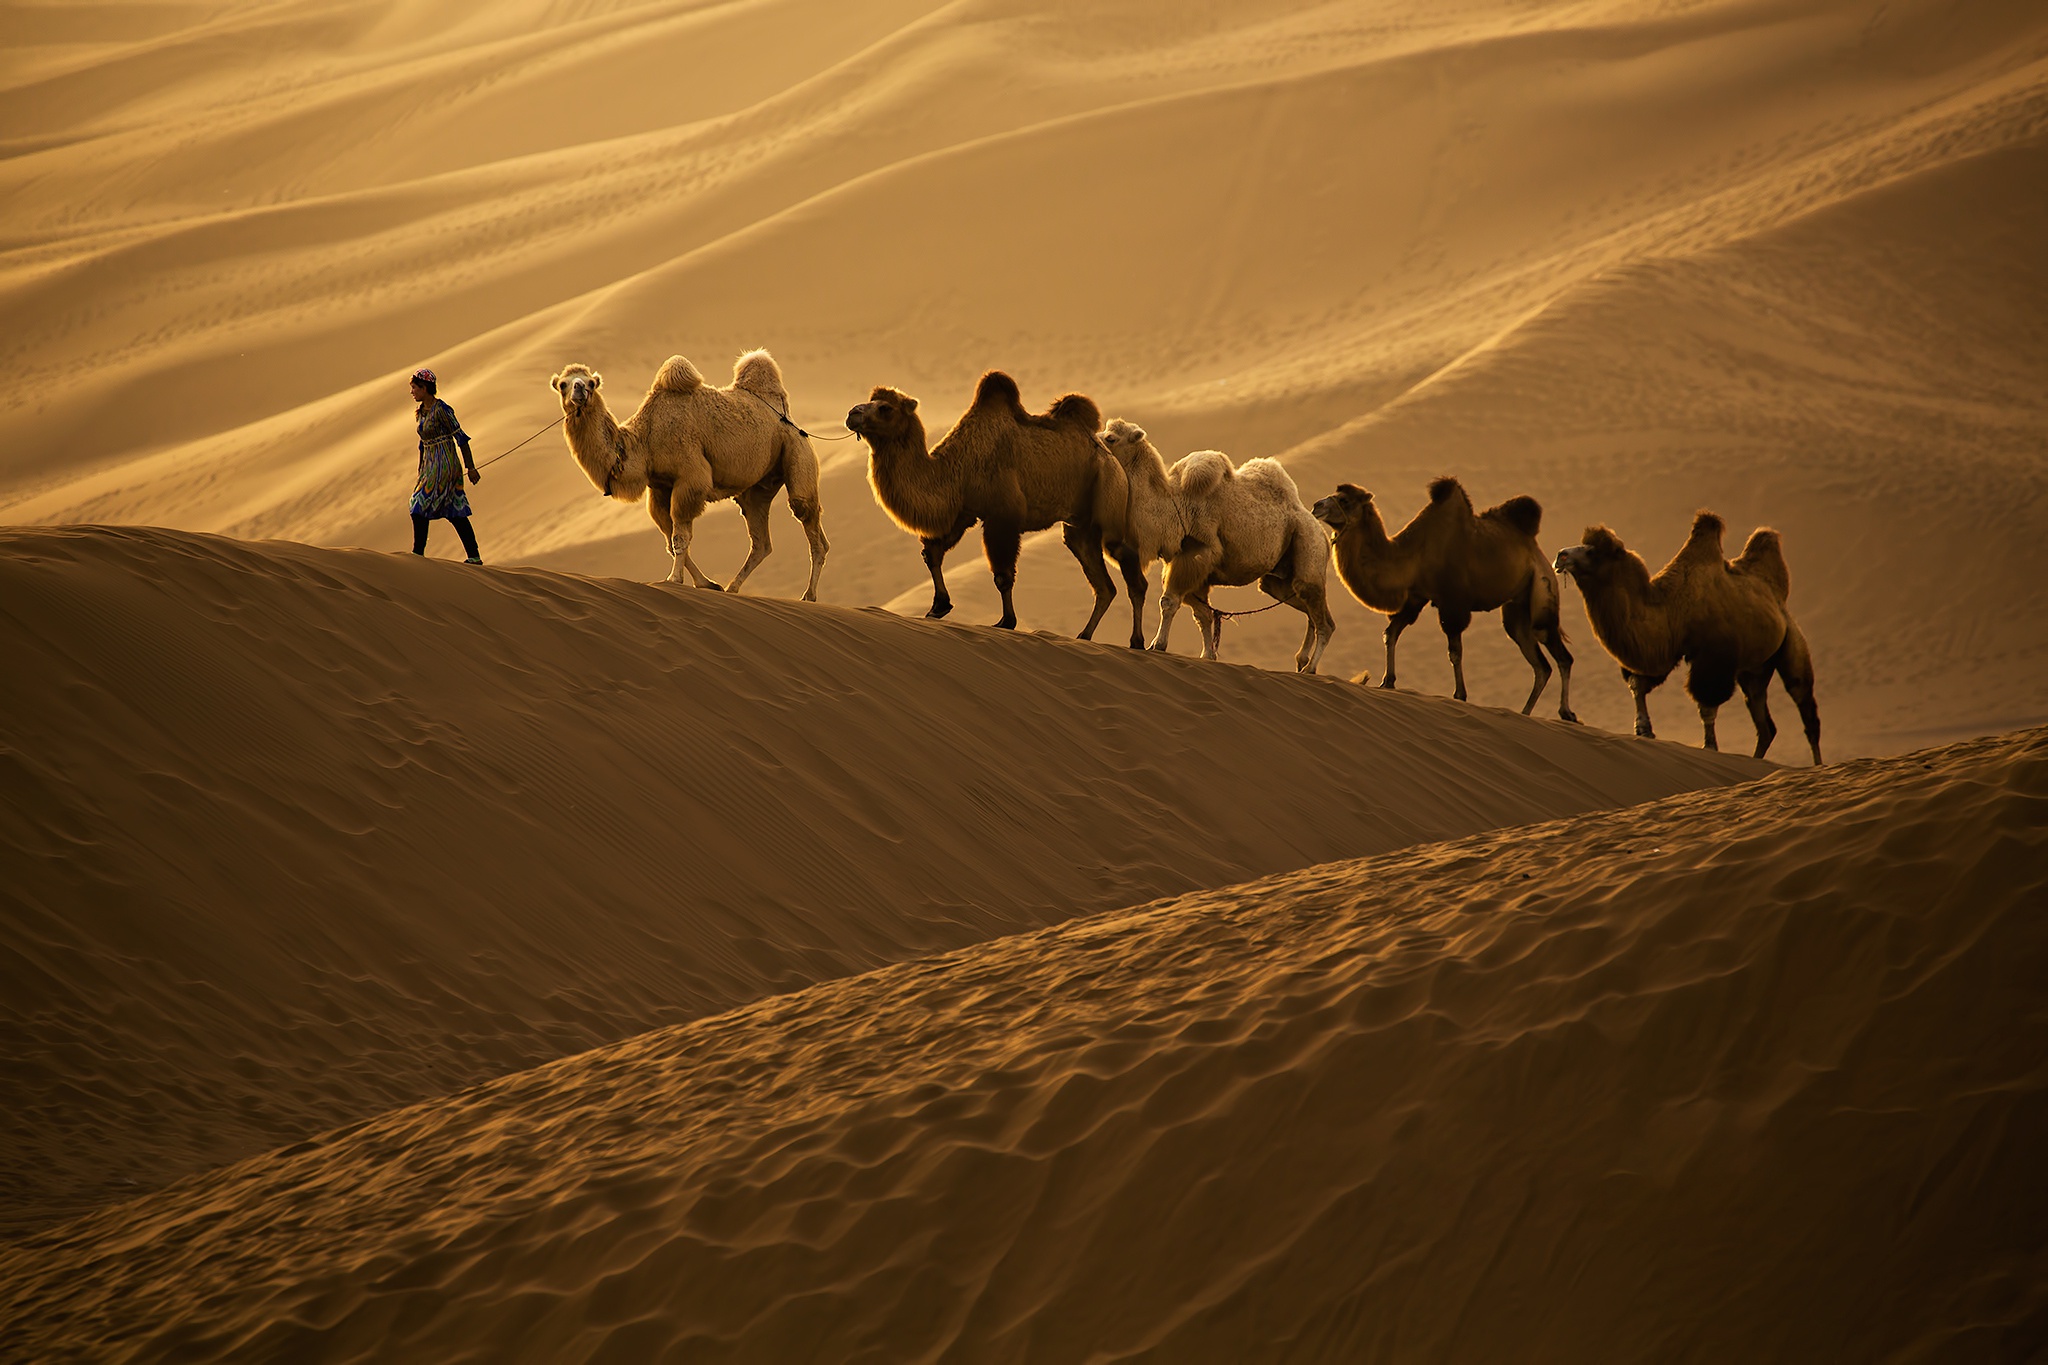 986265 descargar imagen fotografía, caravana, camello, duna: fondos de pantalla y protectores de pantalla gratis